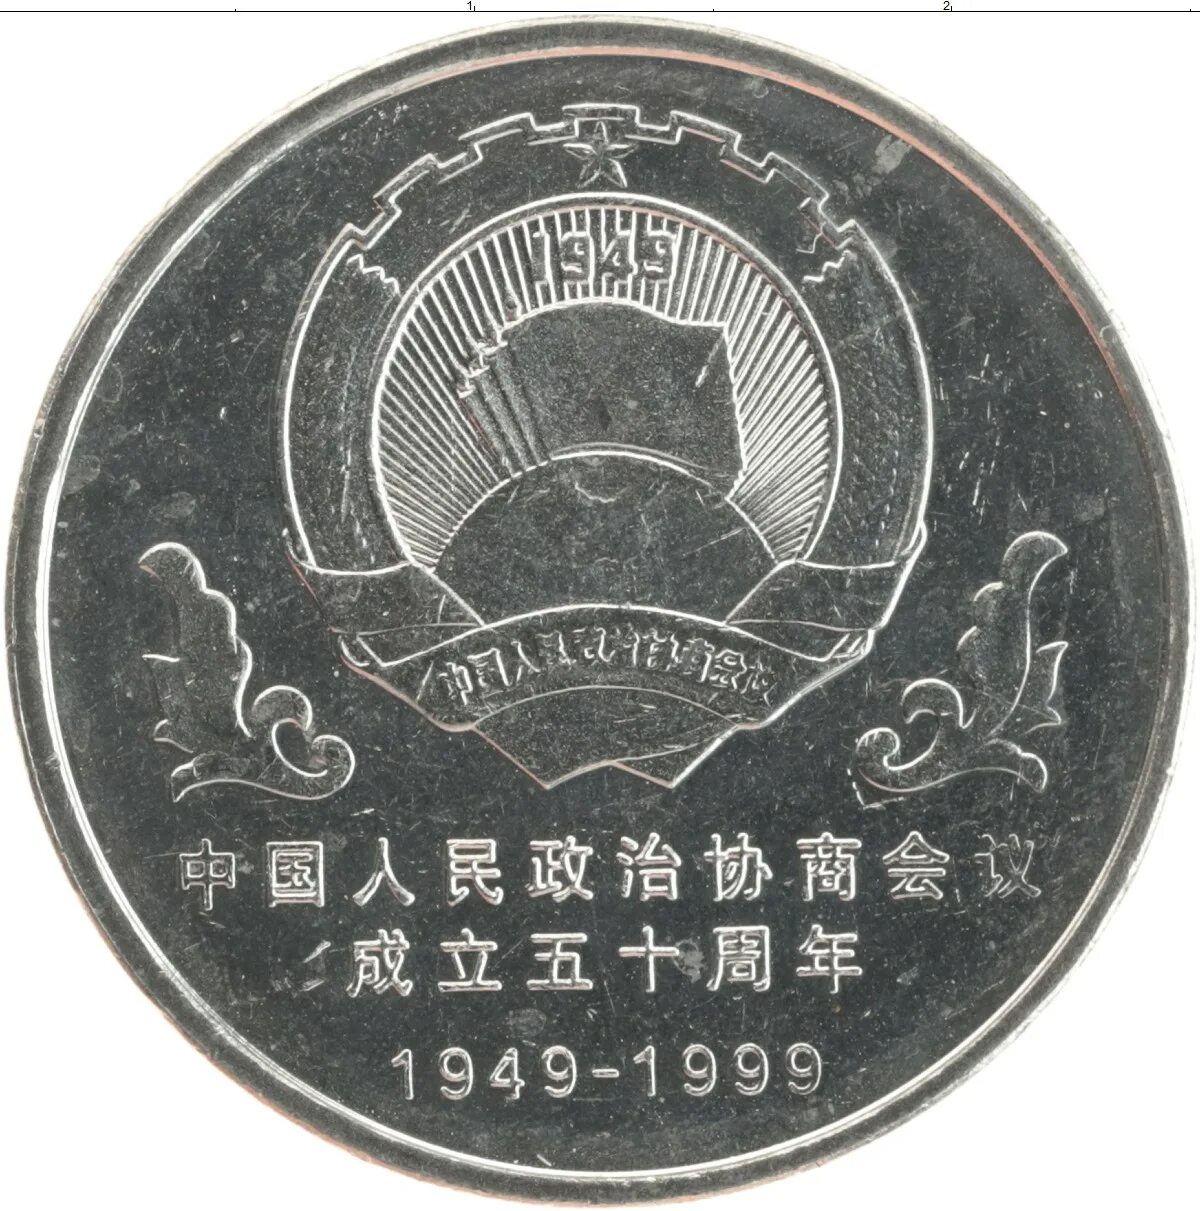 Китайский юань монеты. 1 Юань 1999 Китай. Китайские монеты. Китайская монета 1999. Китайский юань 1999 года.